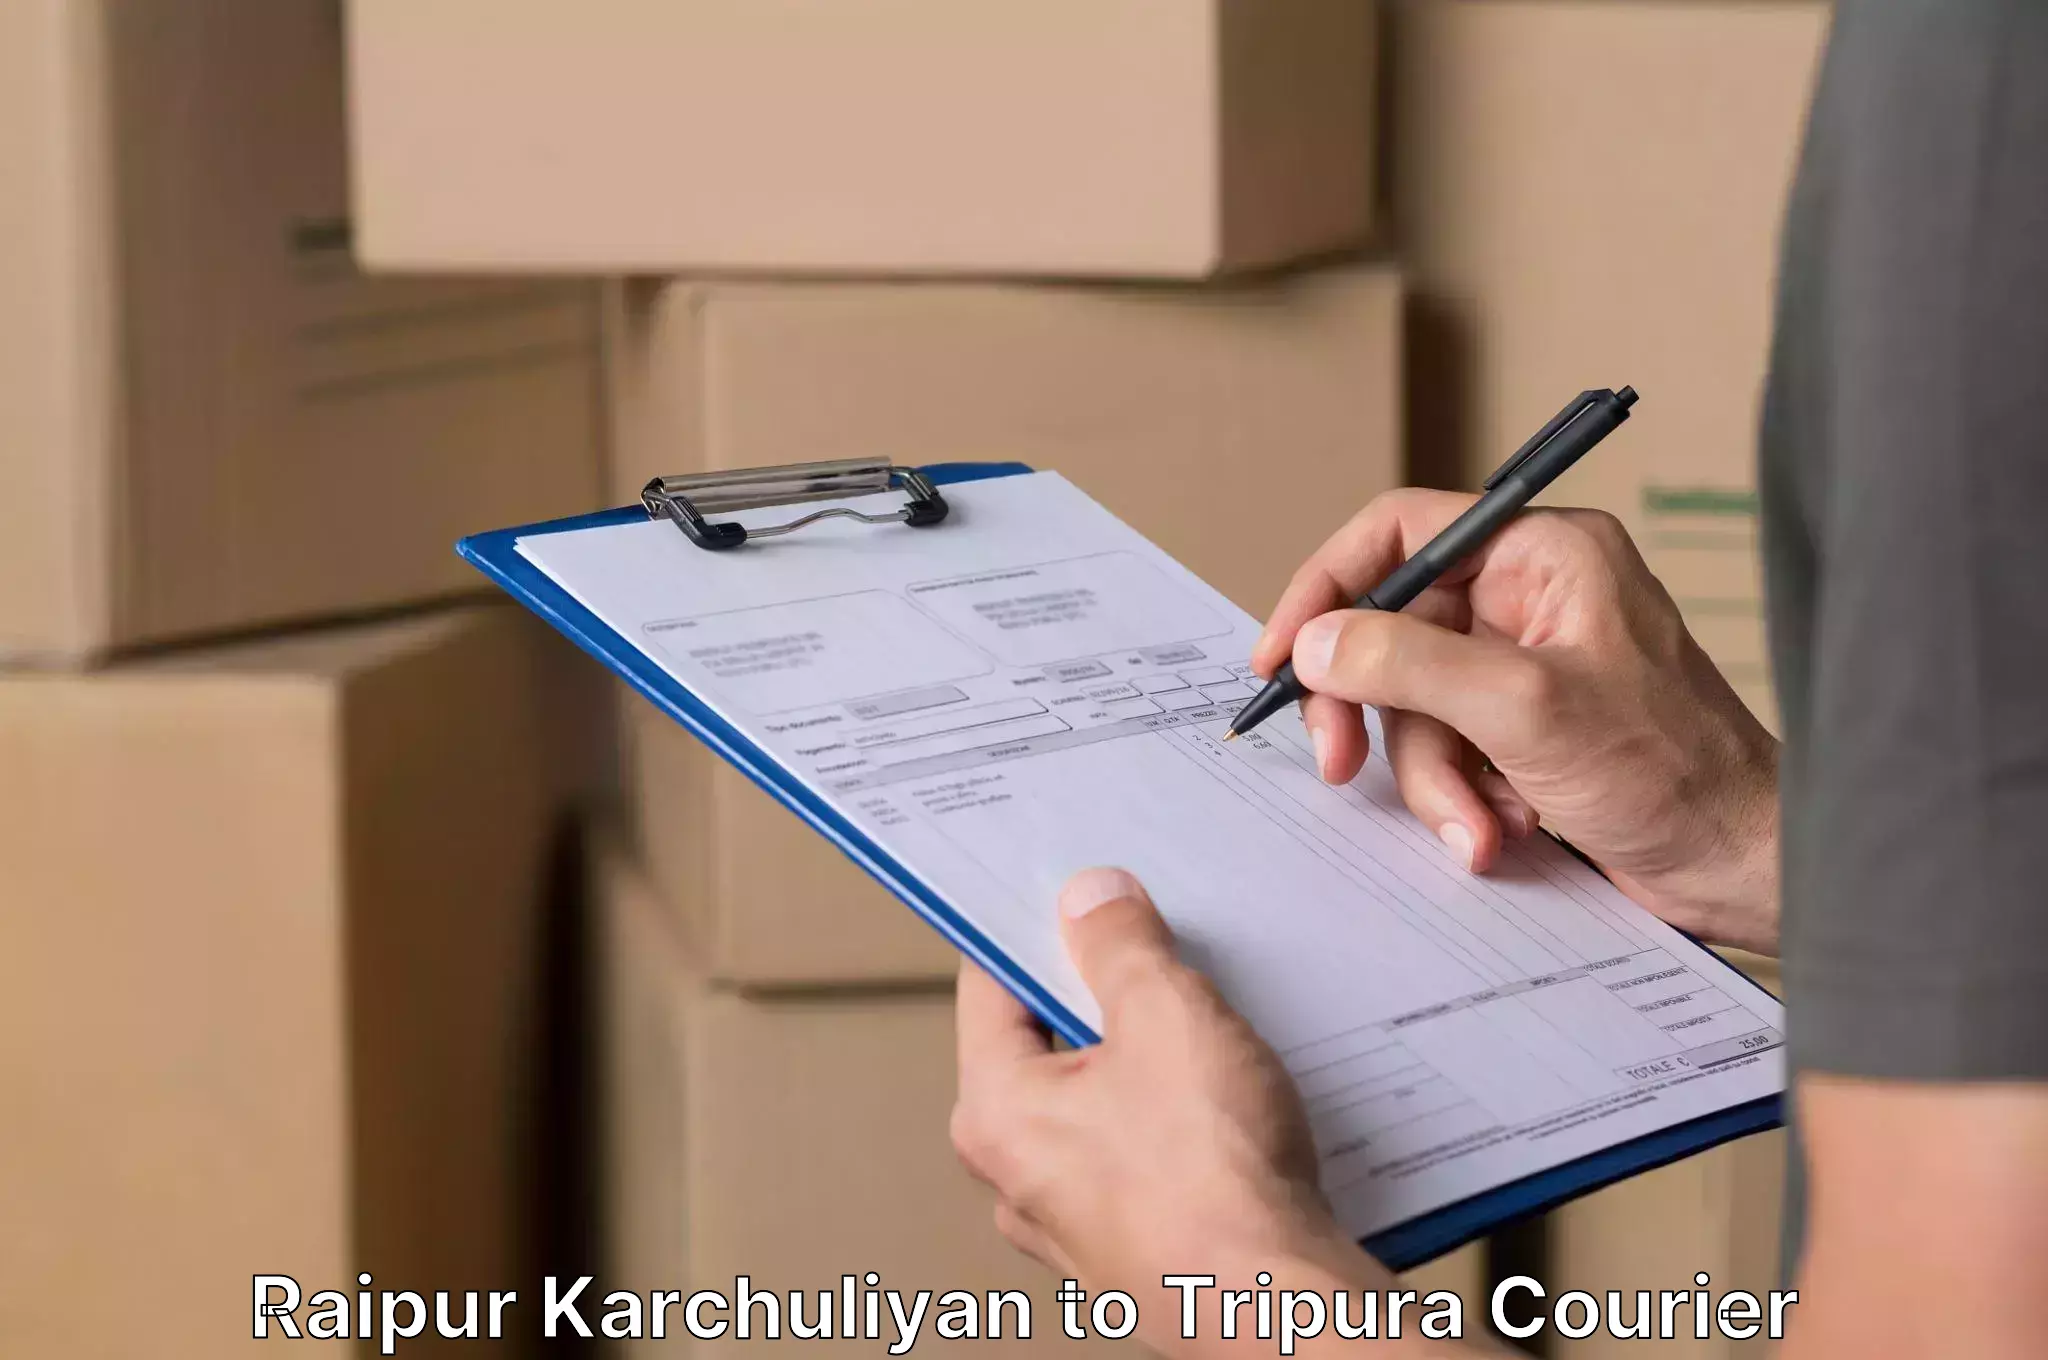 Professional furniture movers Raipur Karchuliyan to Amarpur